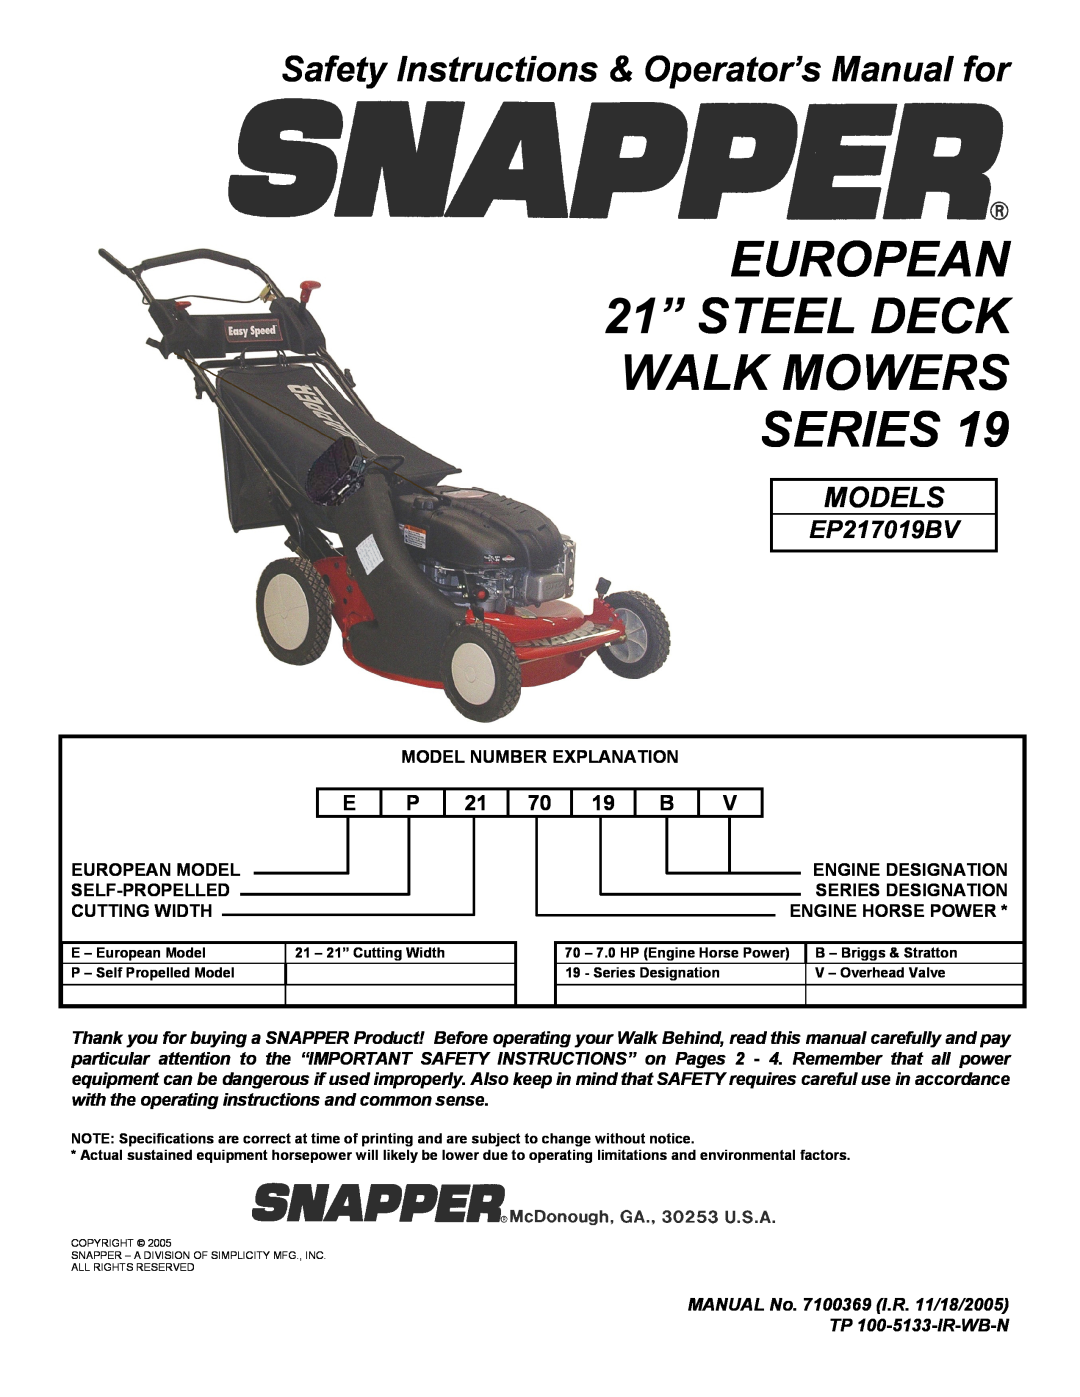 Snapper EP217019BV important safety instructions EUROPEAN 21” STEEL DECK WALK MOWERS SERIES, Models 